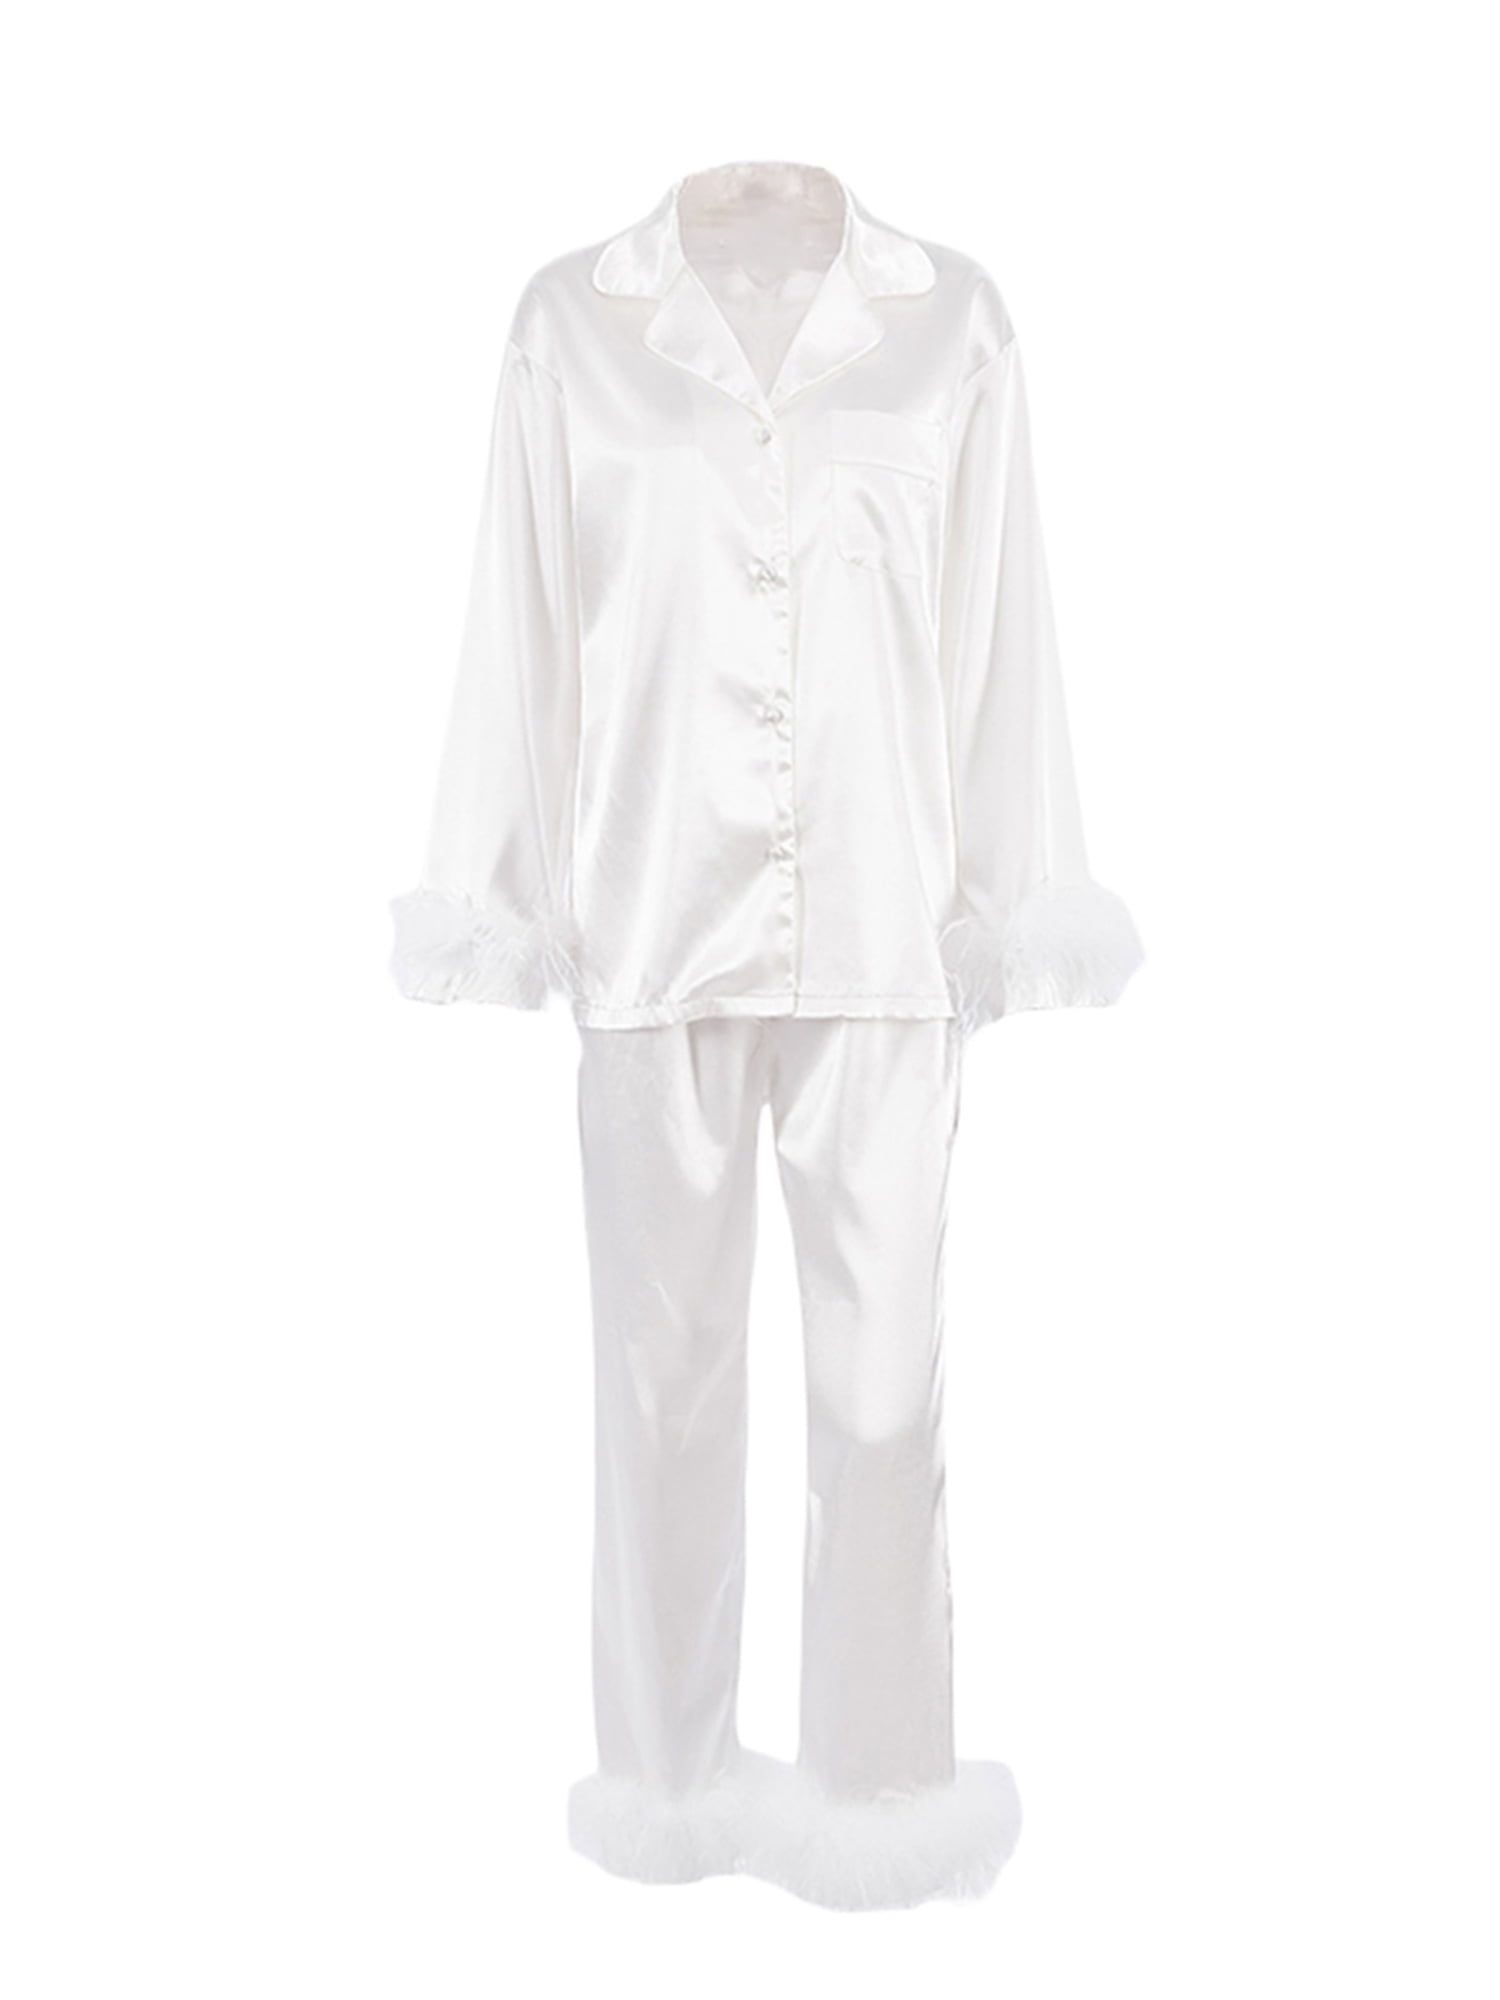 LV SILK 2200/ dc applies #pjays #nightsuit #nightwear #silk #letscatnap  #loungewear #lv